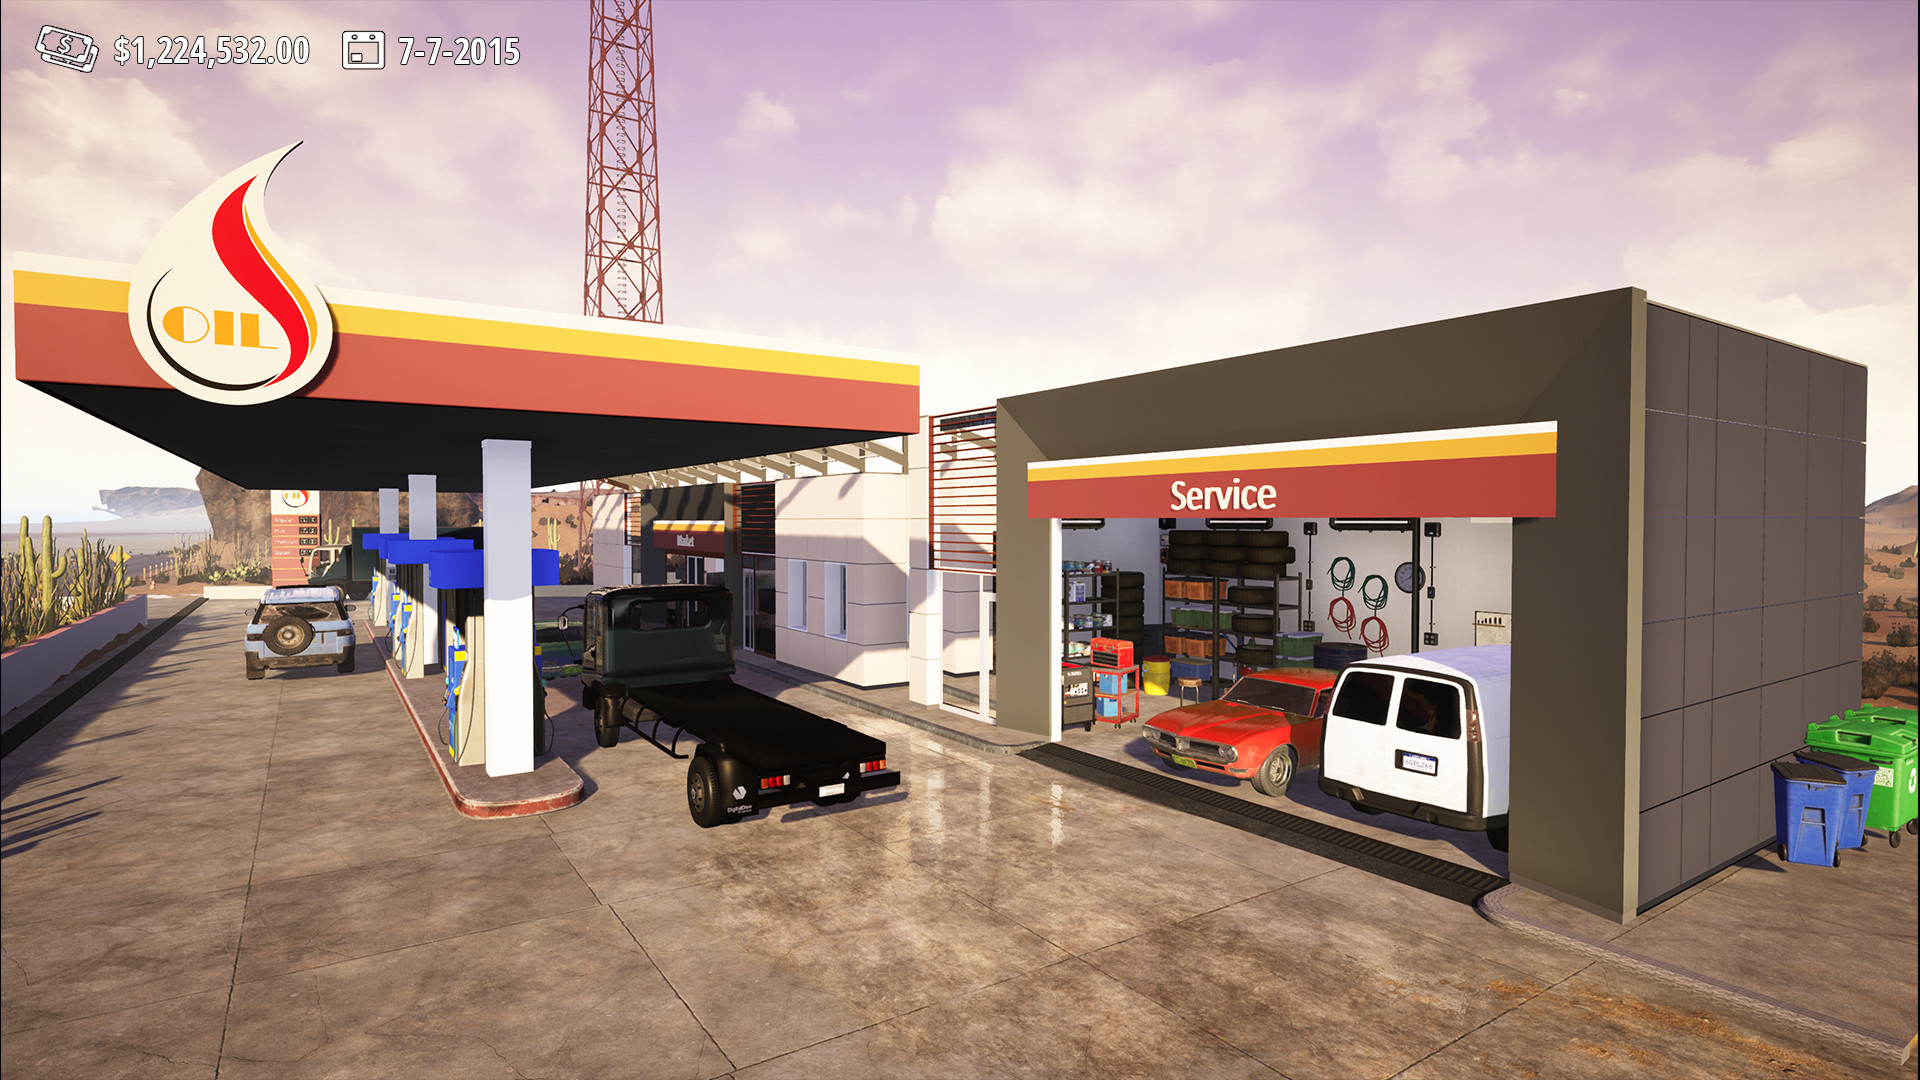 gas station simulator key steam